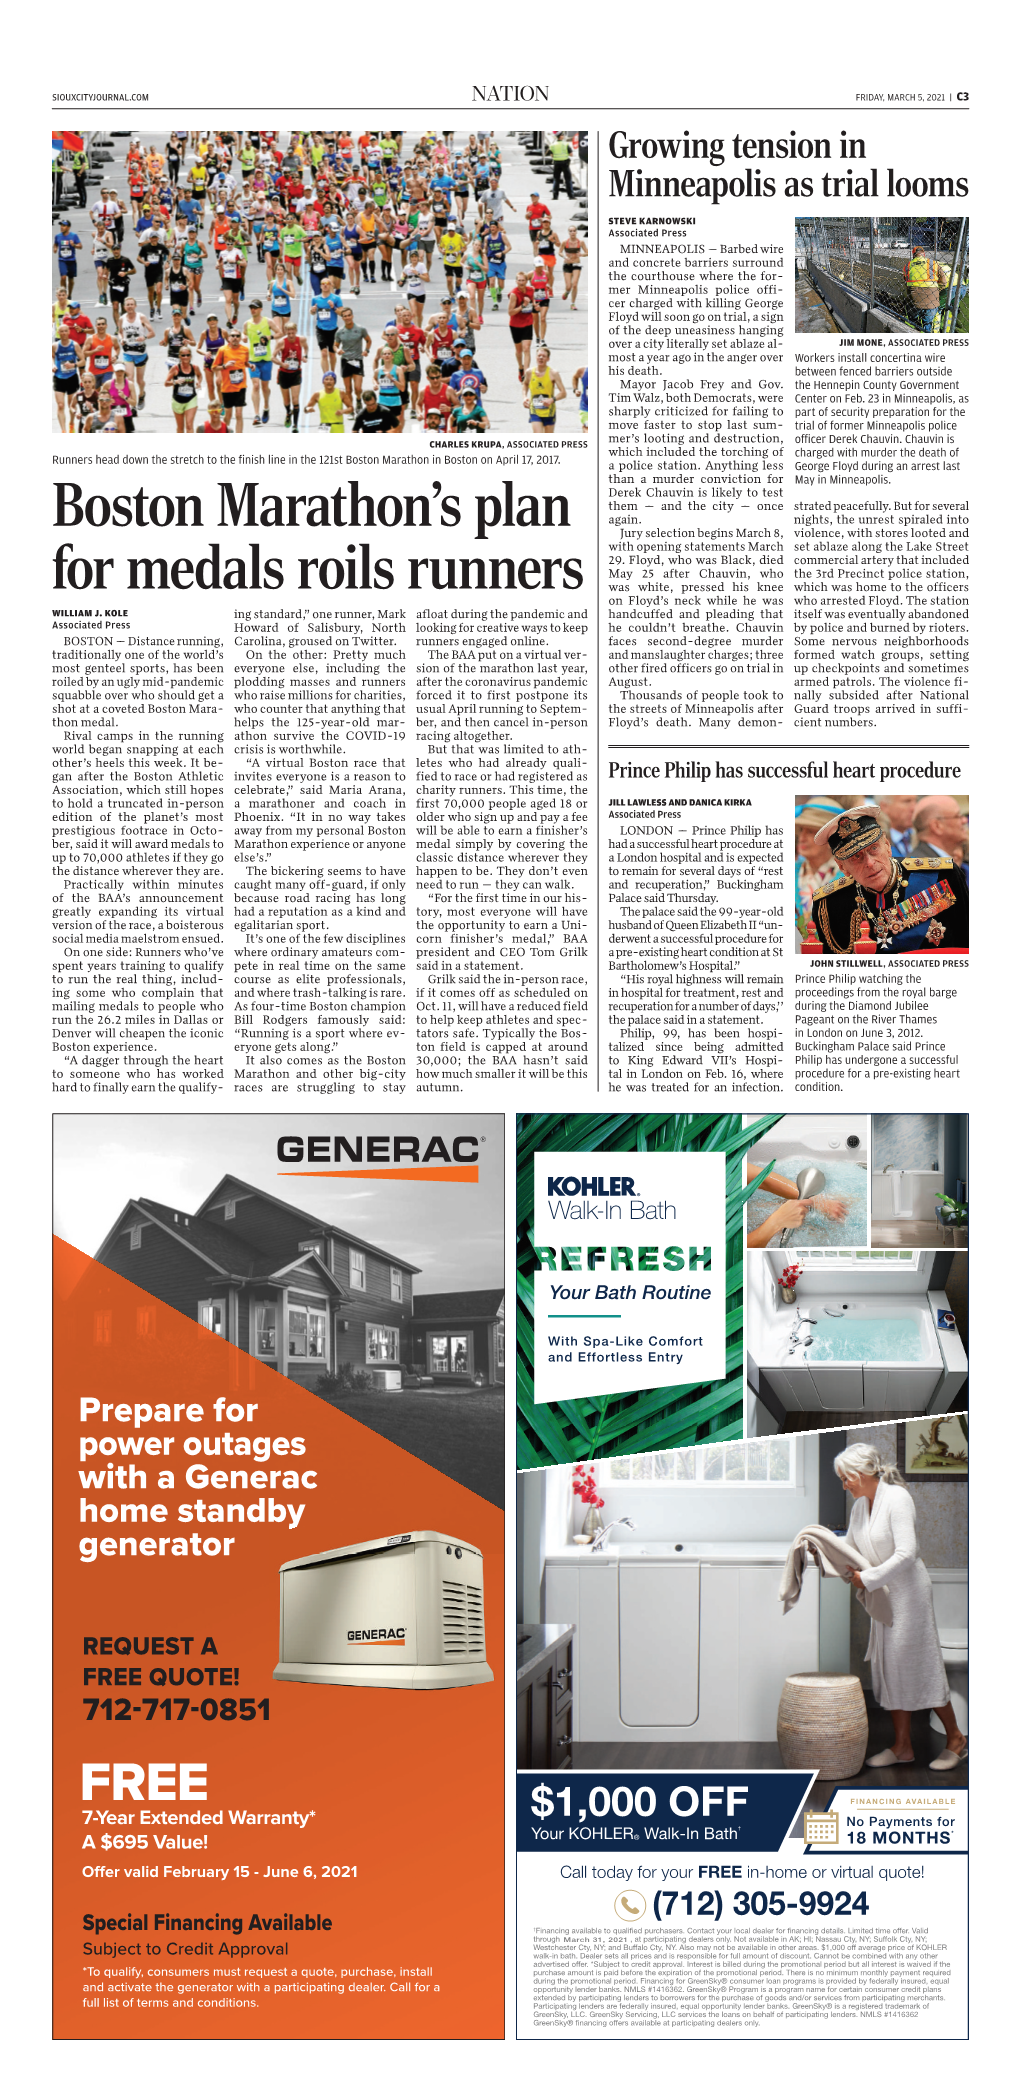 Boston Marathon's Plan for Medals Roils Runners